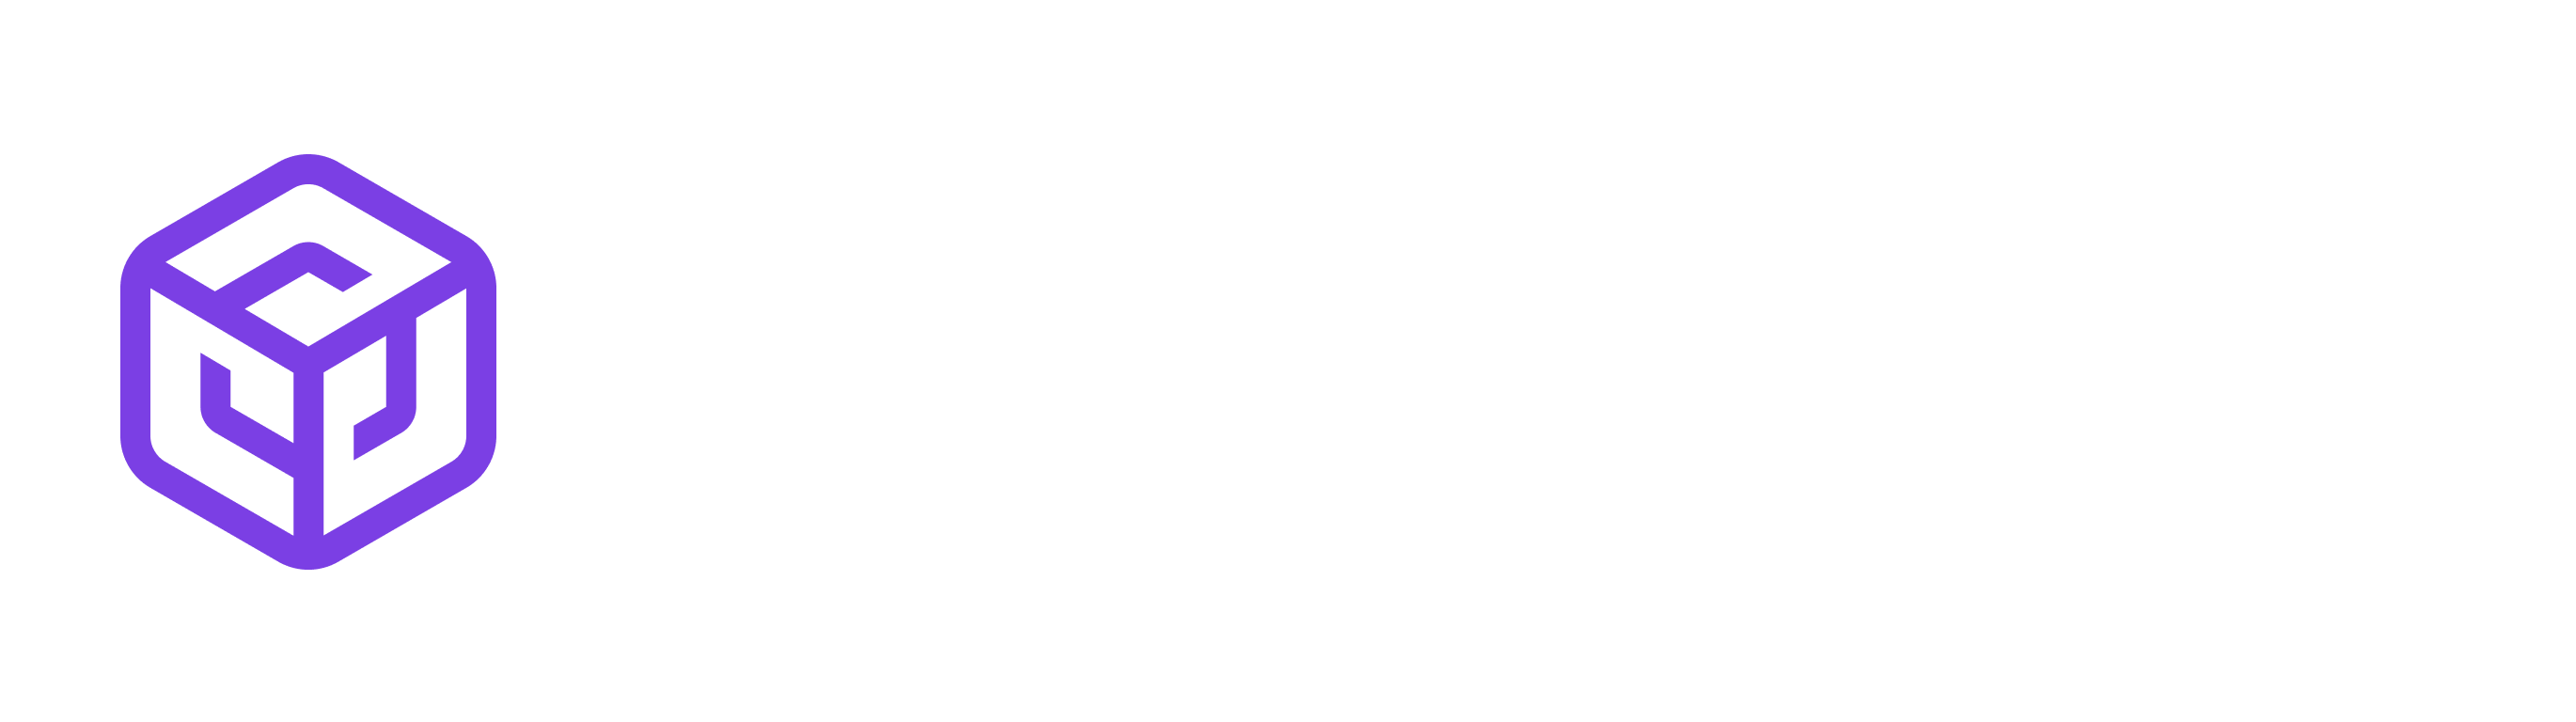 Polygon Edge